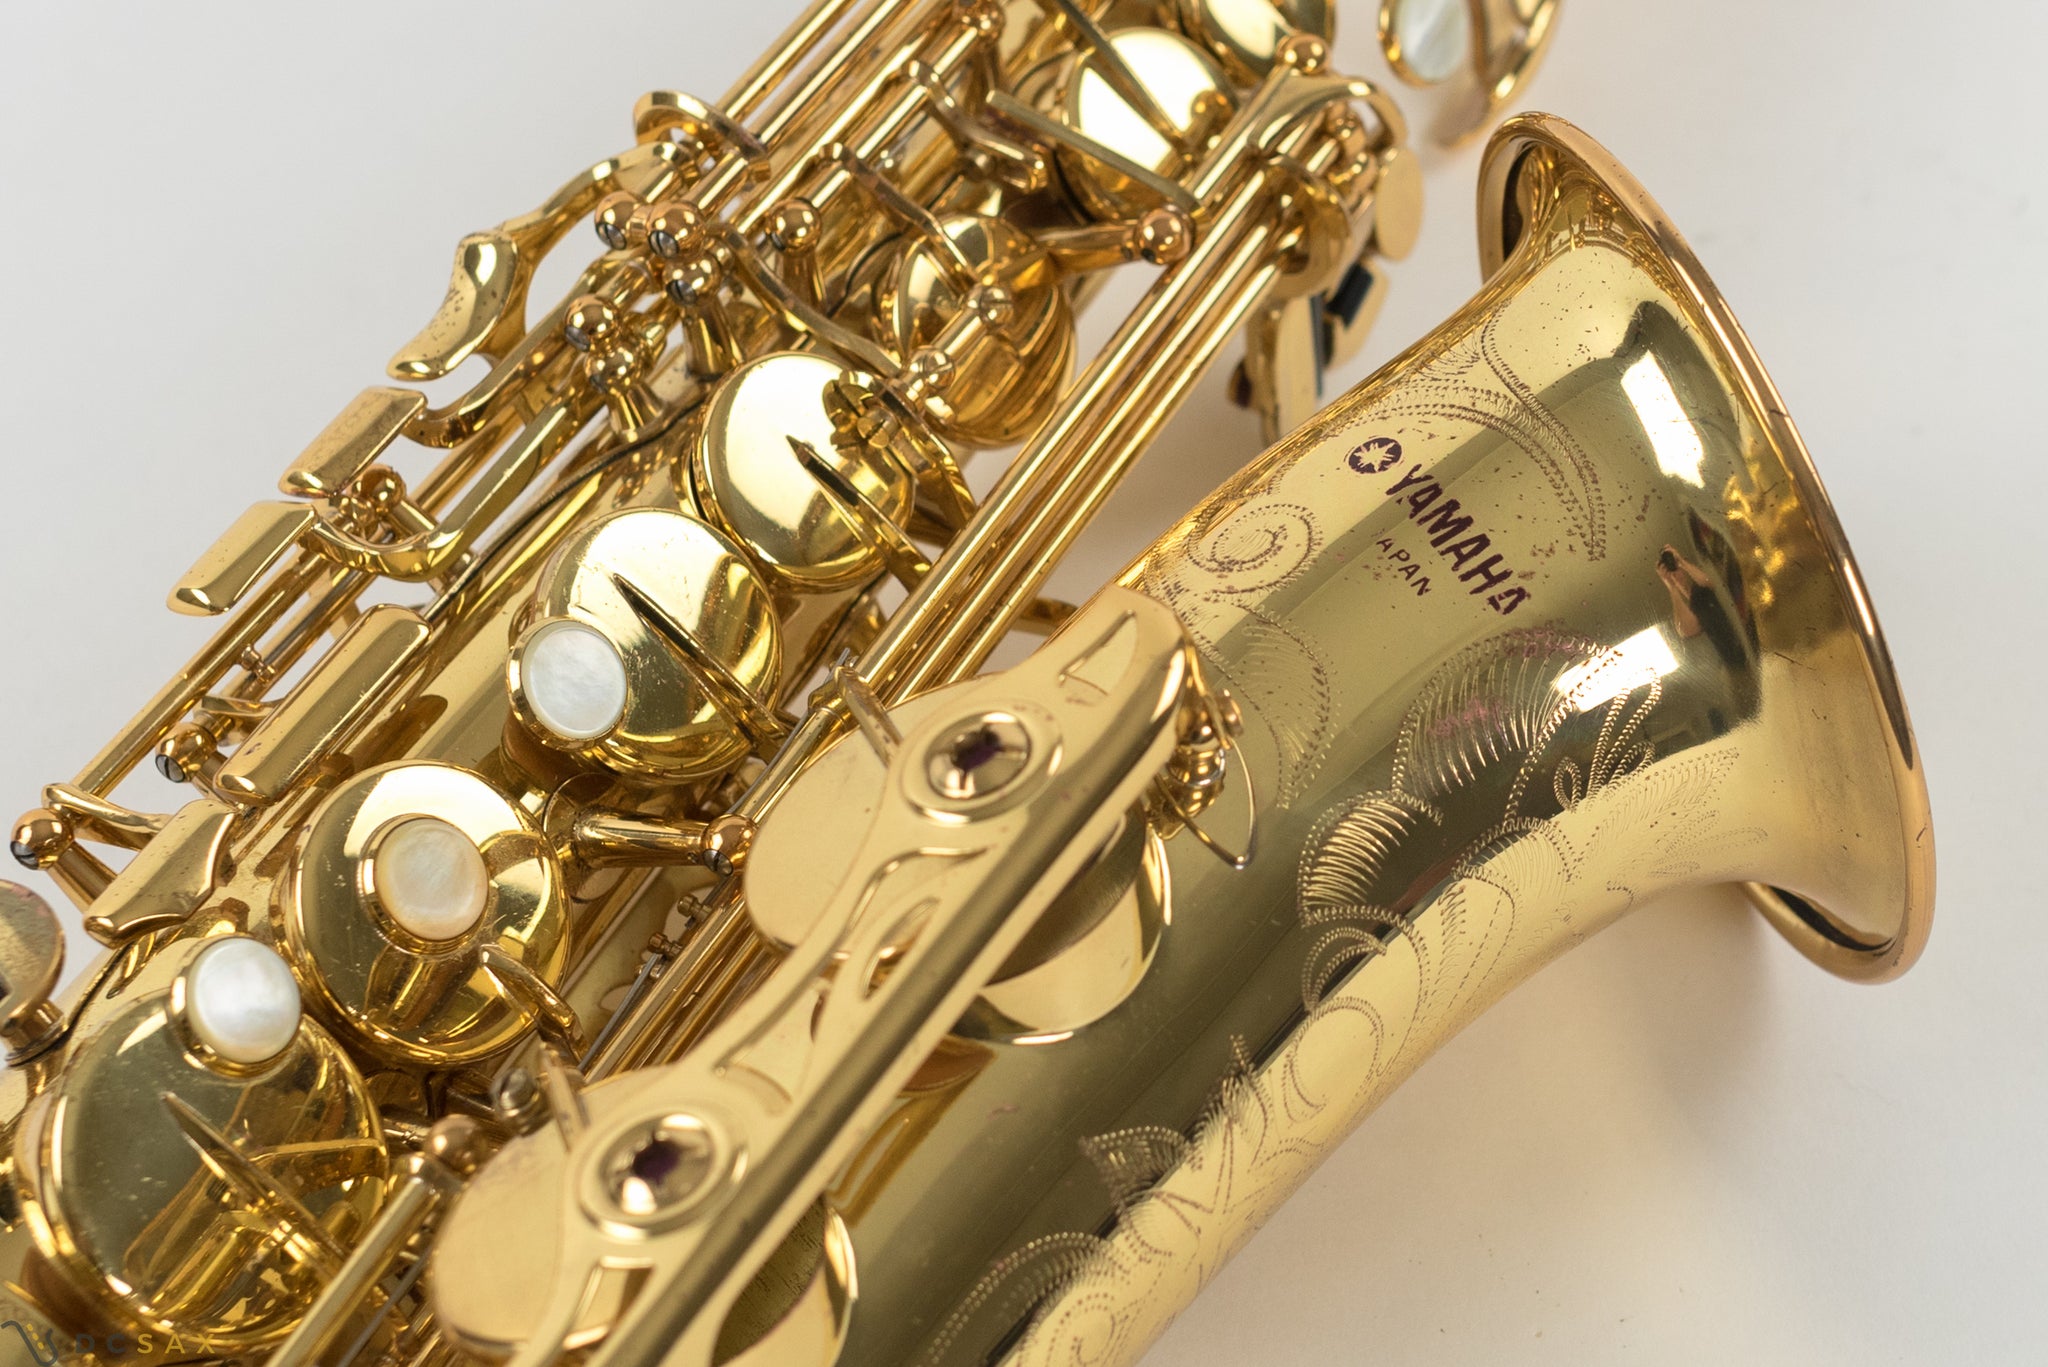 Yamaha YAS-62 Alto Saxophone, Purple Label, Video